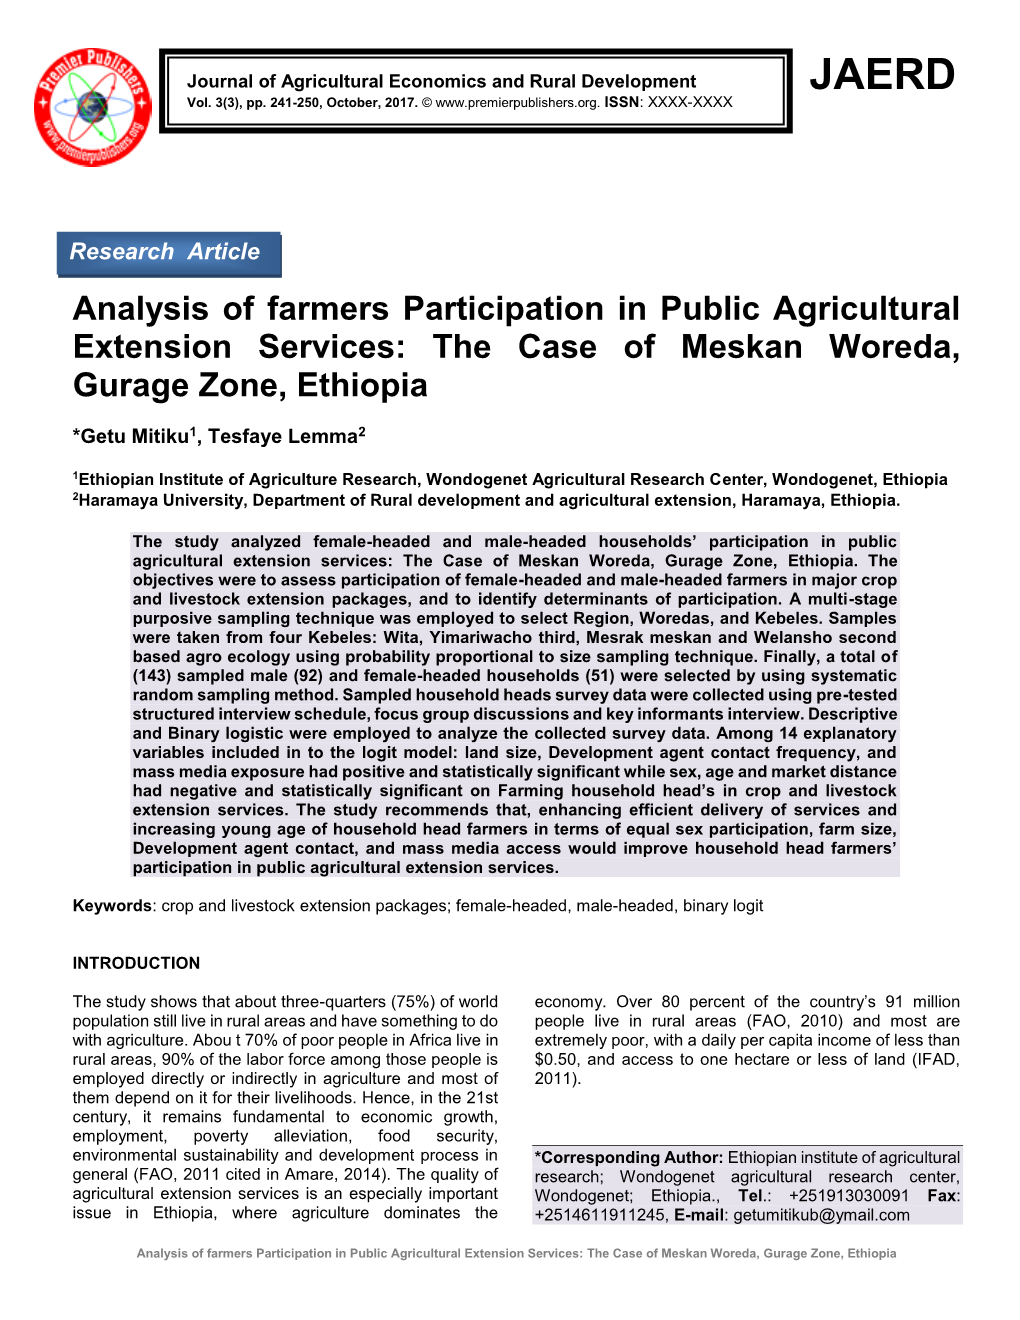 The Case of Meskan Woreda, Gurage Zone, Ethiopia